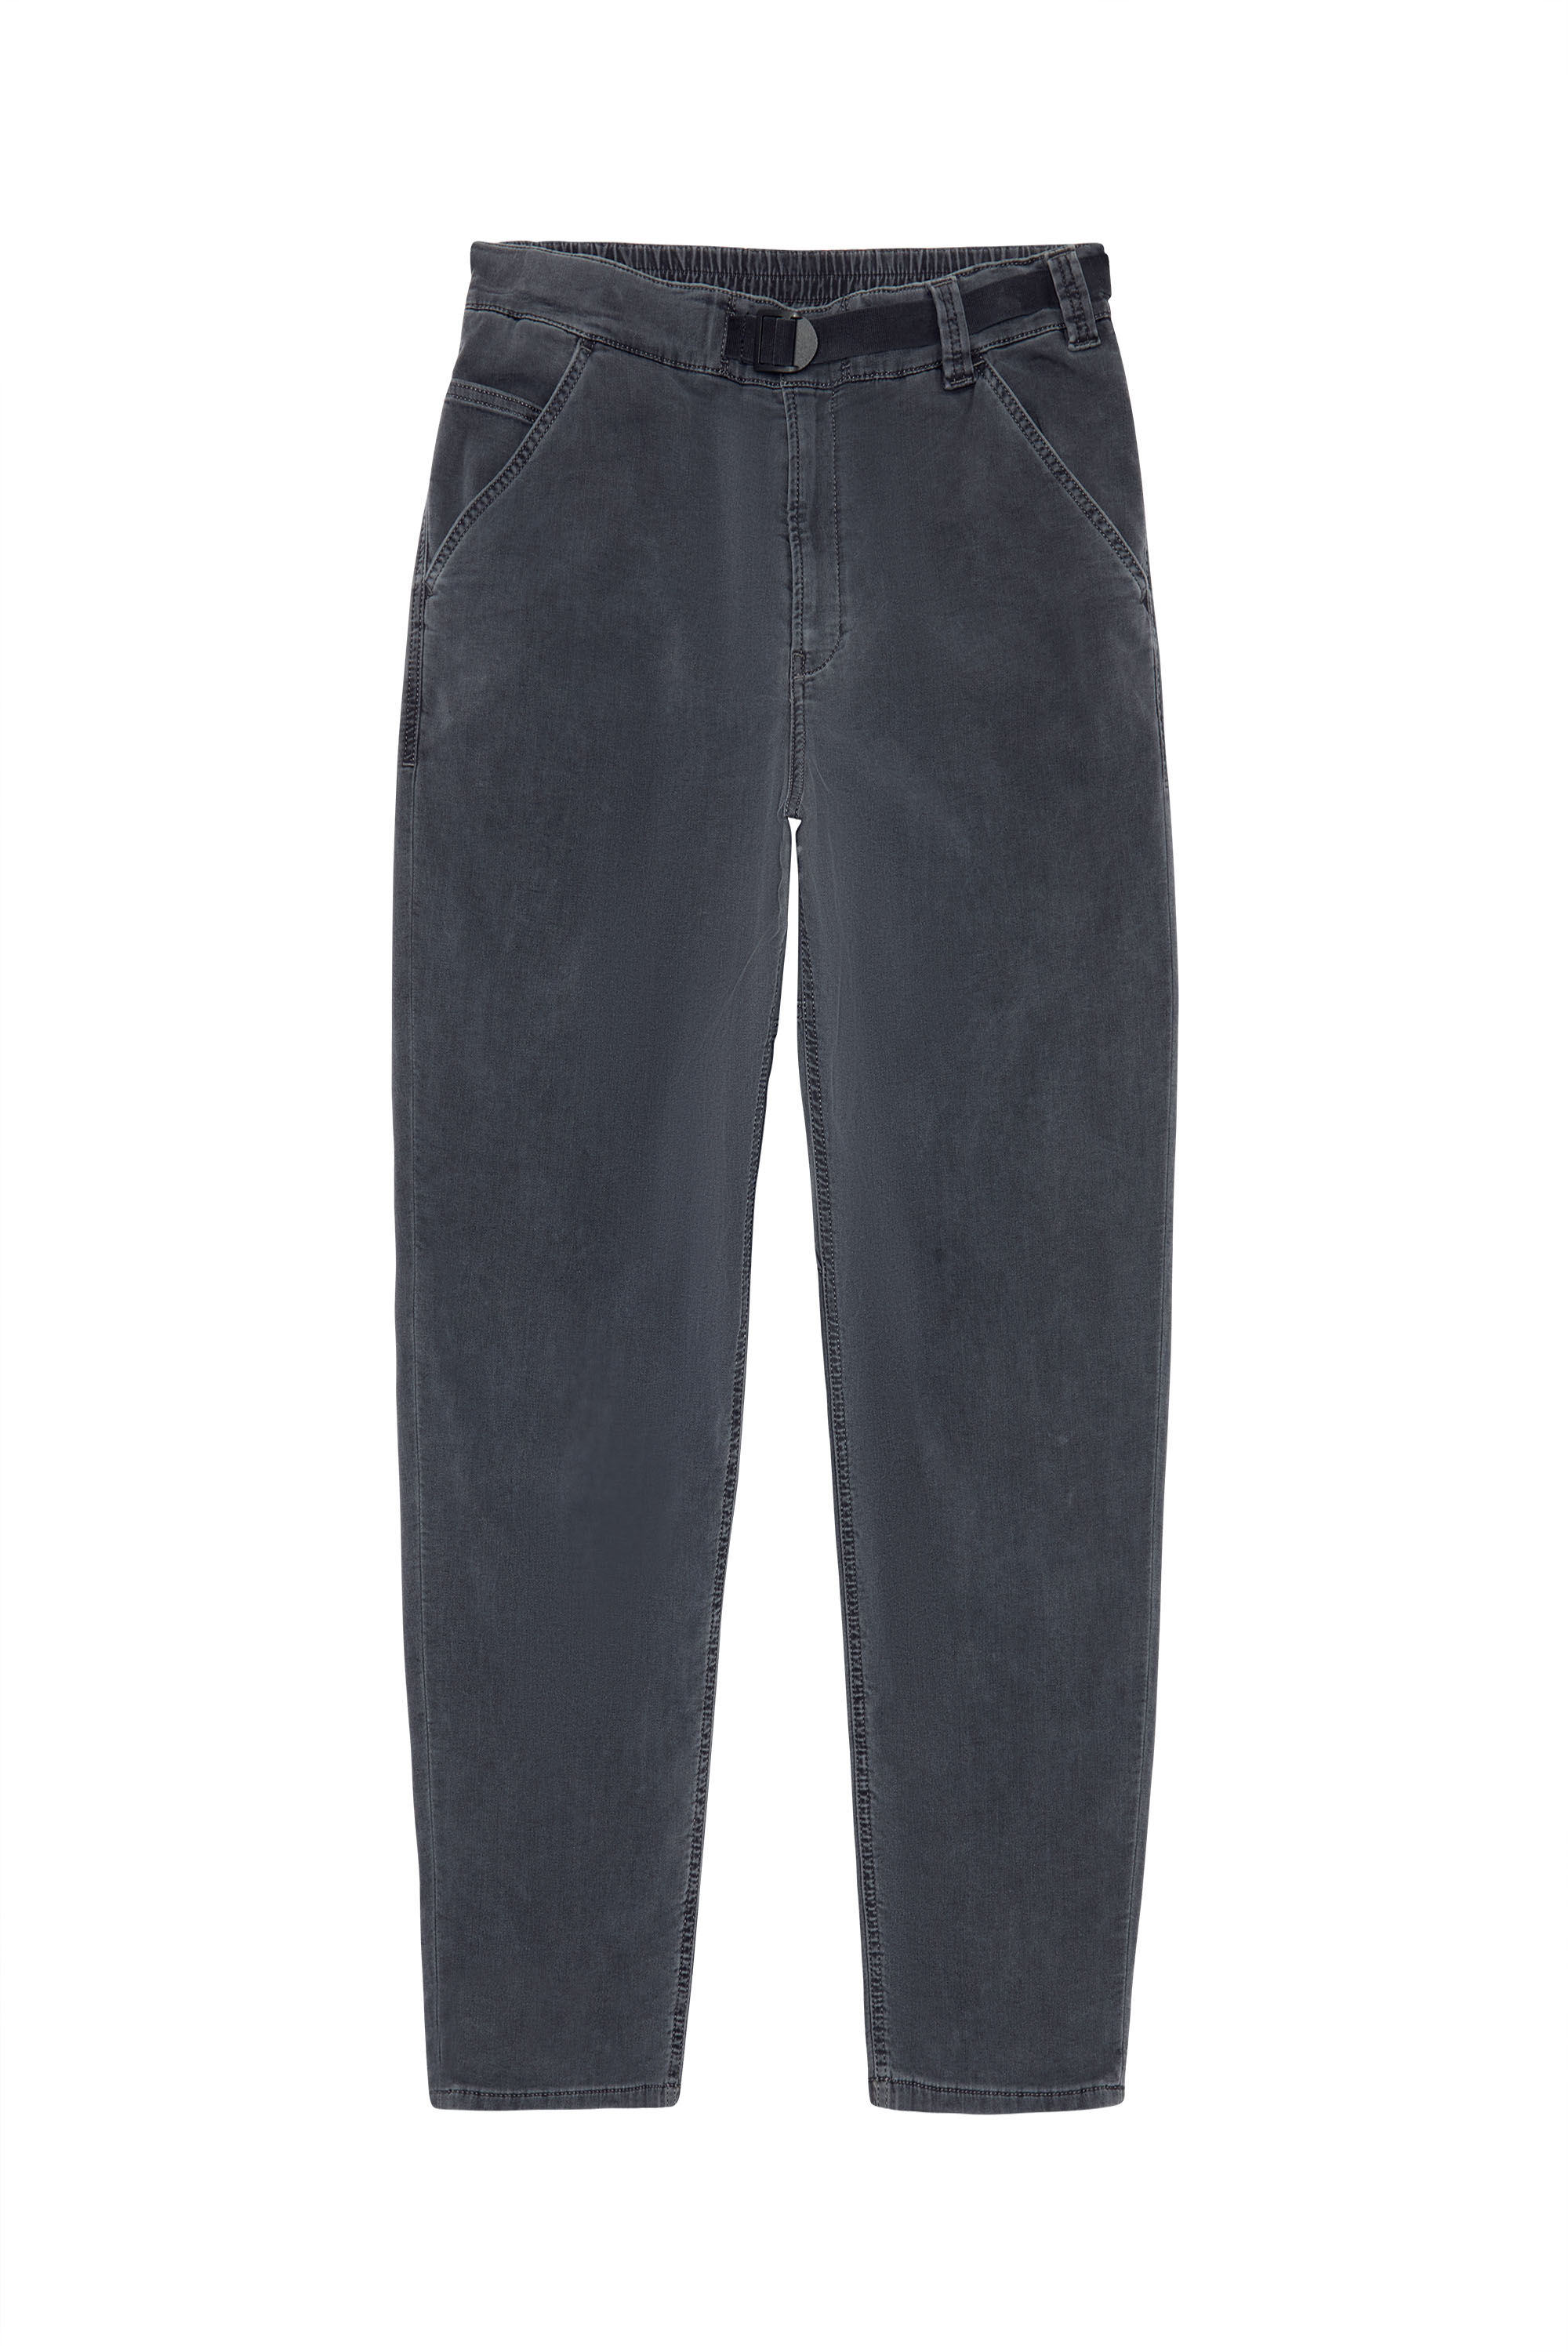 Krooley JoggJeans® 069ZH Tapered, Schwarz/Dunkelgrau - Jeans